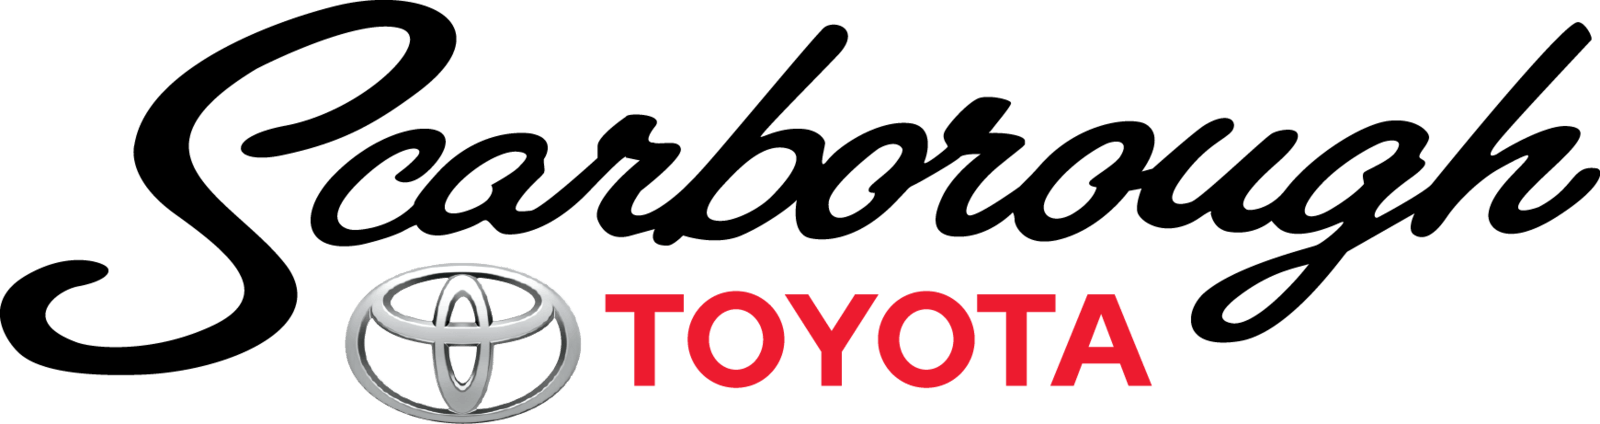 Scarborough Logo - Because We Care: Scarborough Toyota Raises $25,000 | Homes First